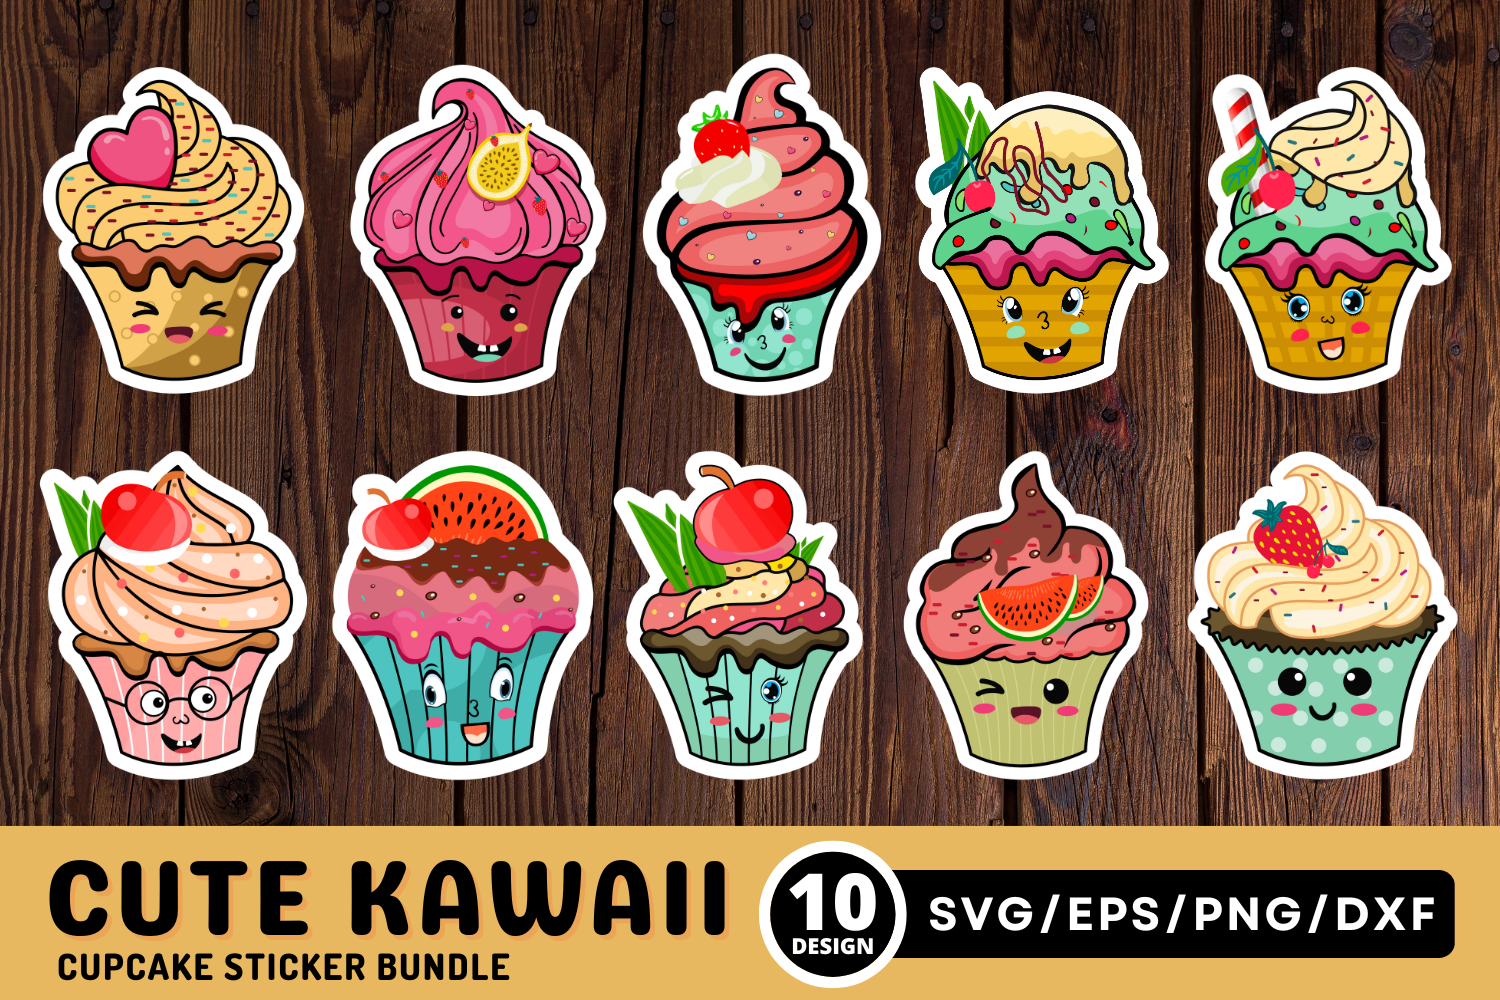 Cute Kawaii Cupcakes SVG Bundle - Buy t-shirt designs